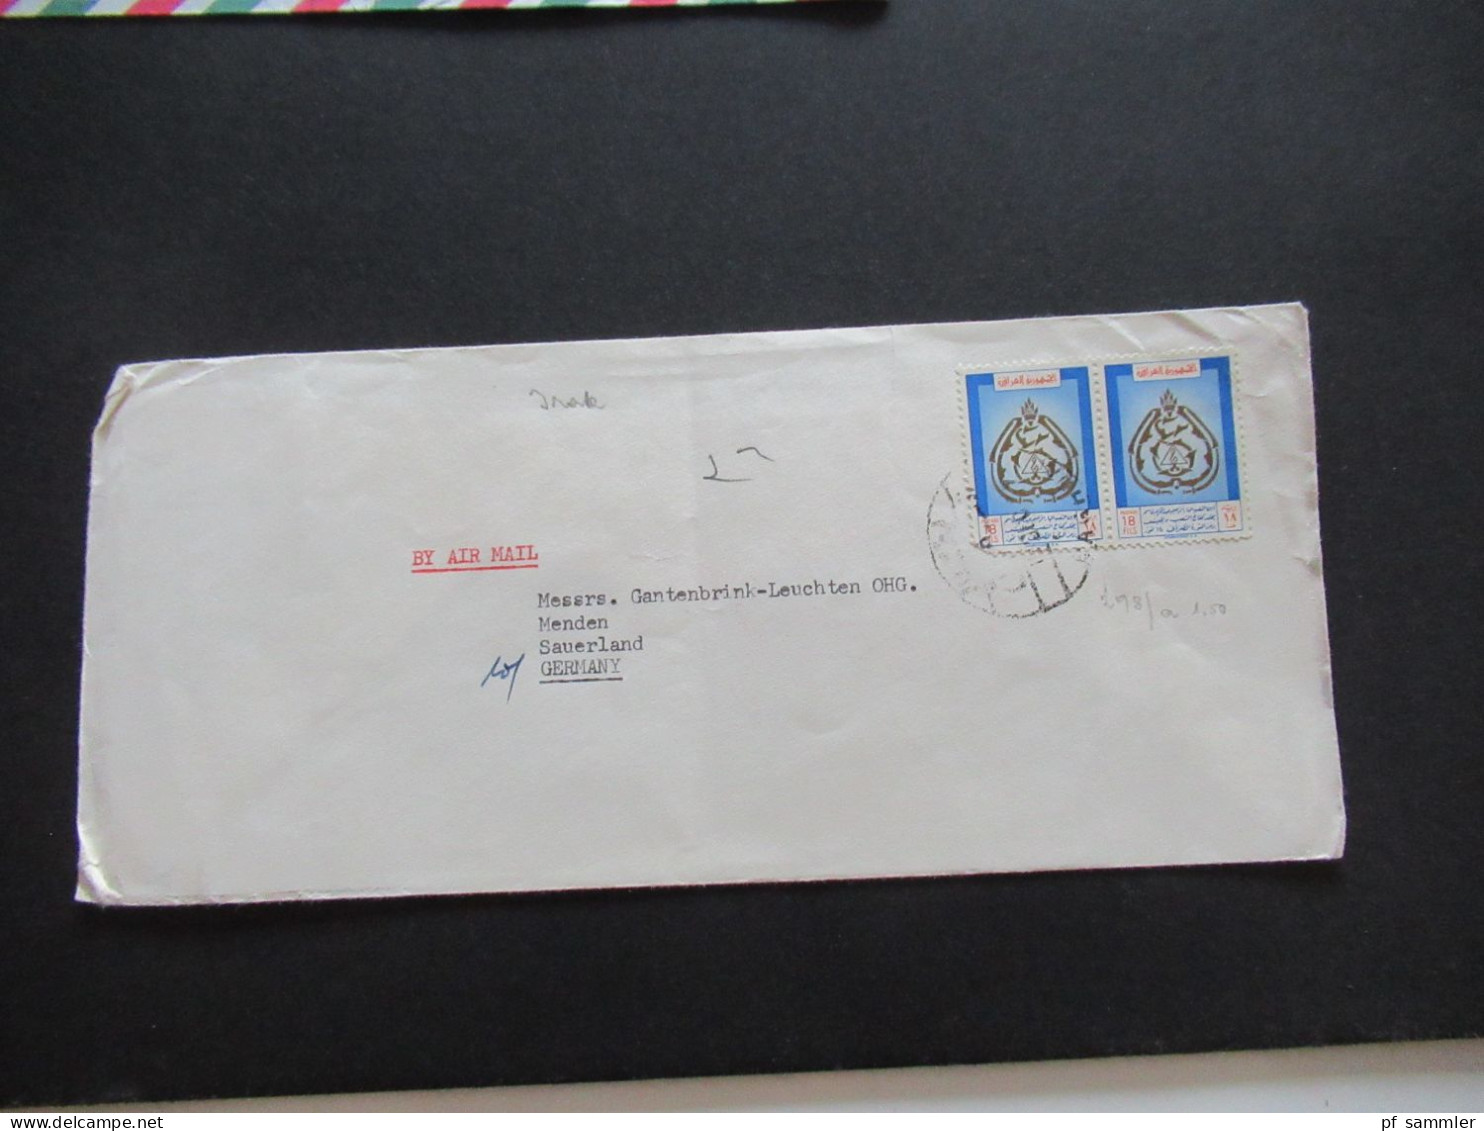 Asien Iran / Persien Teheran Persia 1960er Jahre Via Air Mail Luftpost 4 Belege Auslandsbriefe